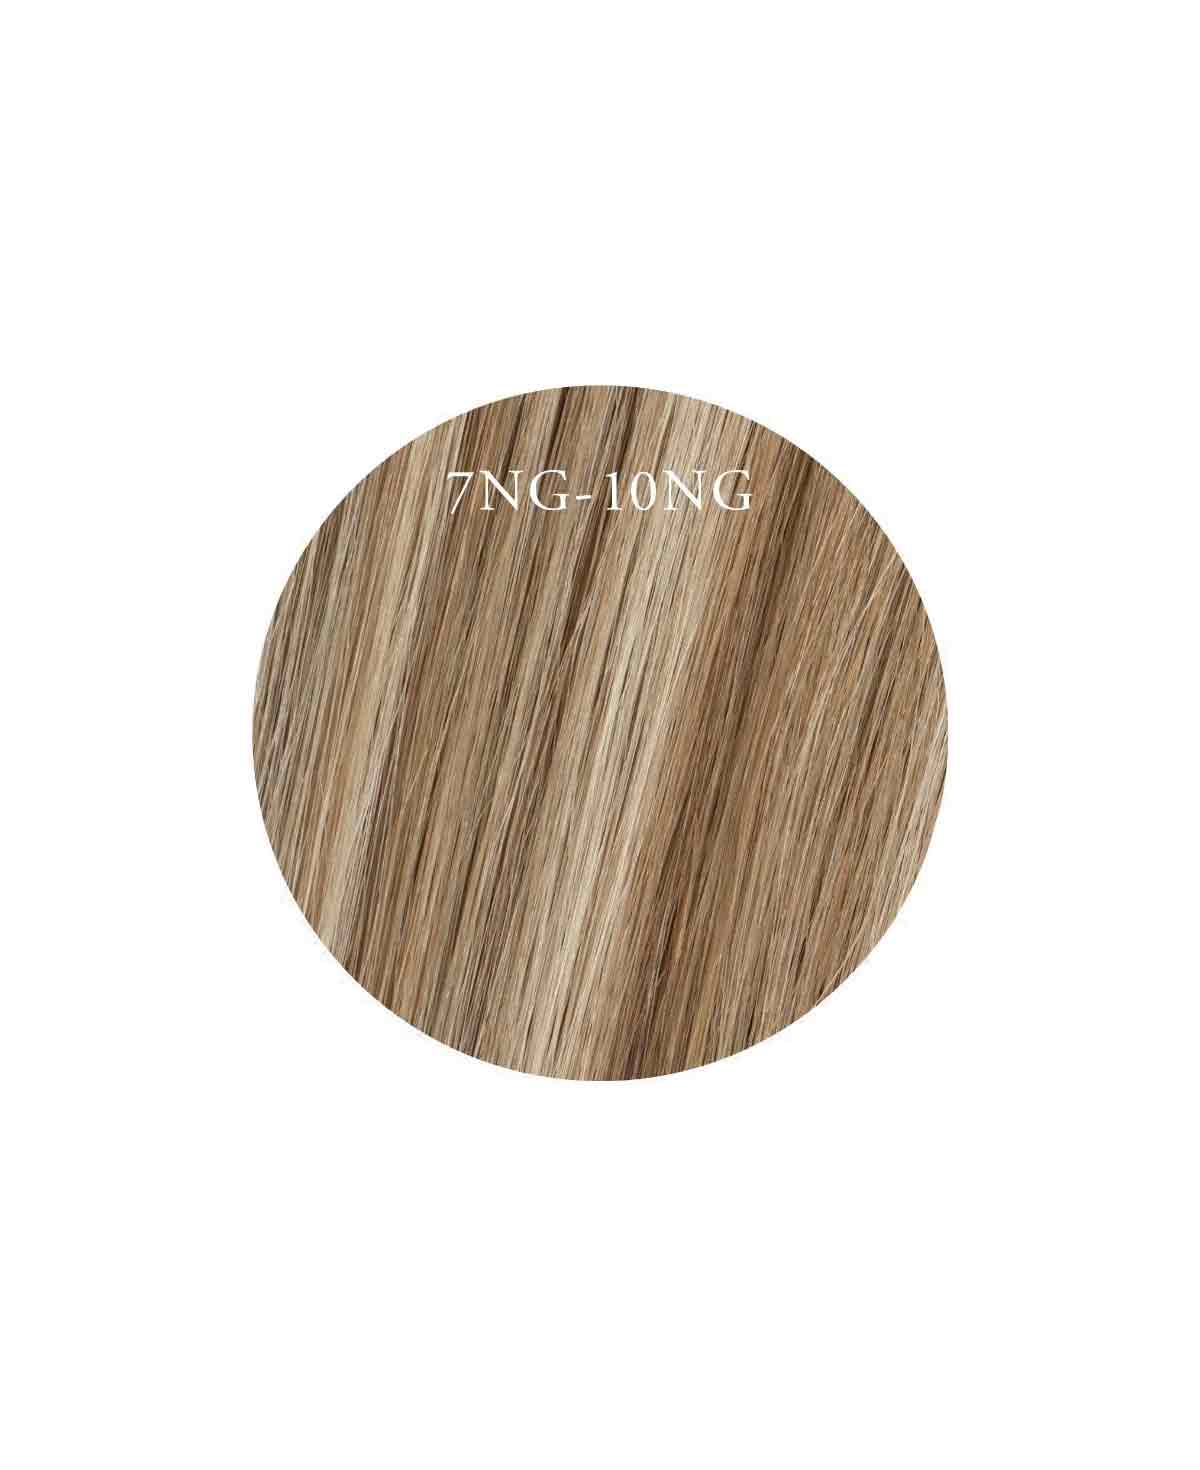 Showpony 45-50cm (20") 7 Piece Clip In Hair Extension - 7NG-10NG Light Bronde Highlight